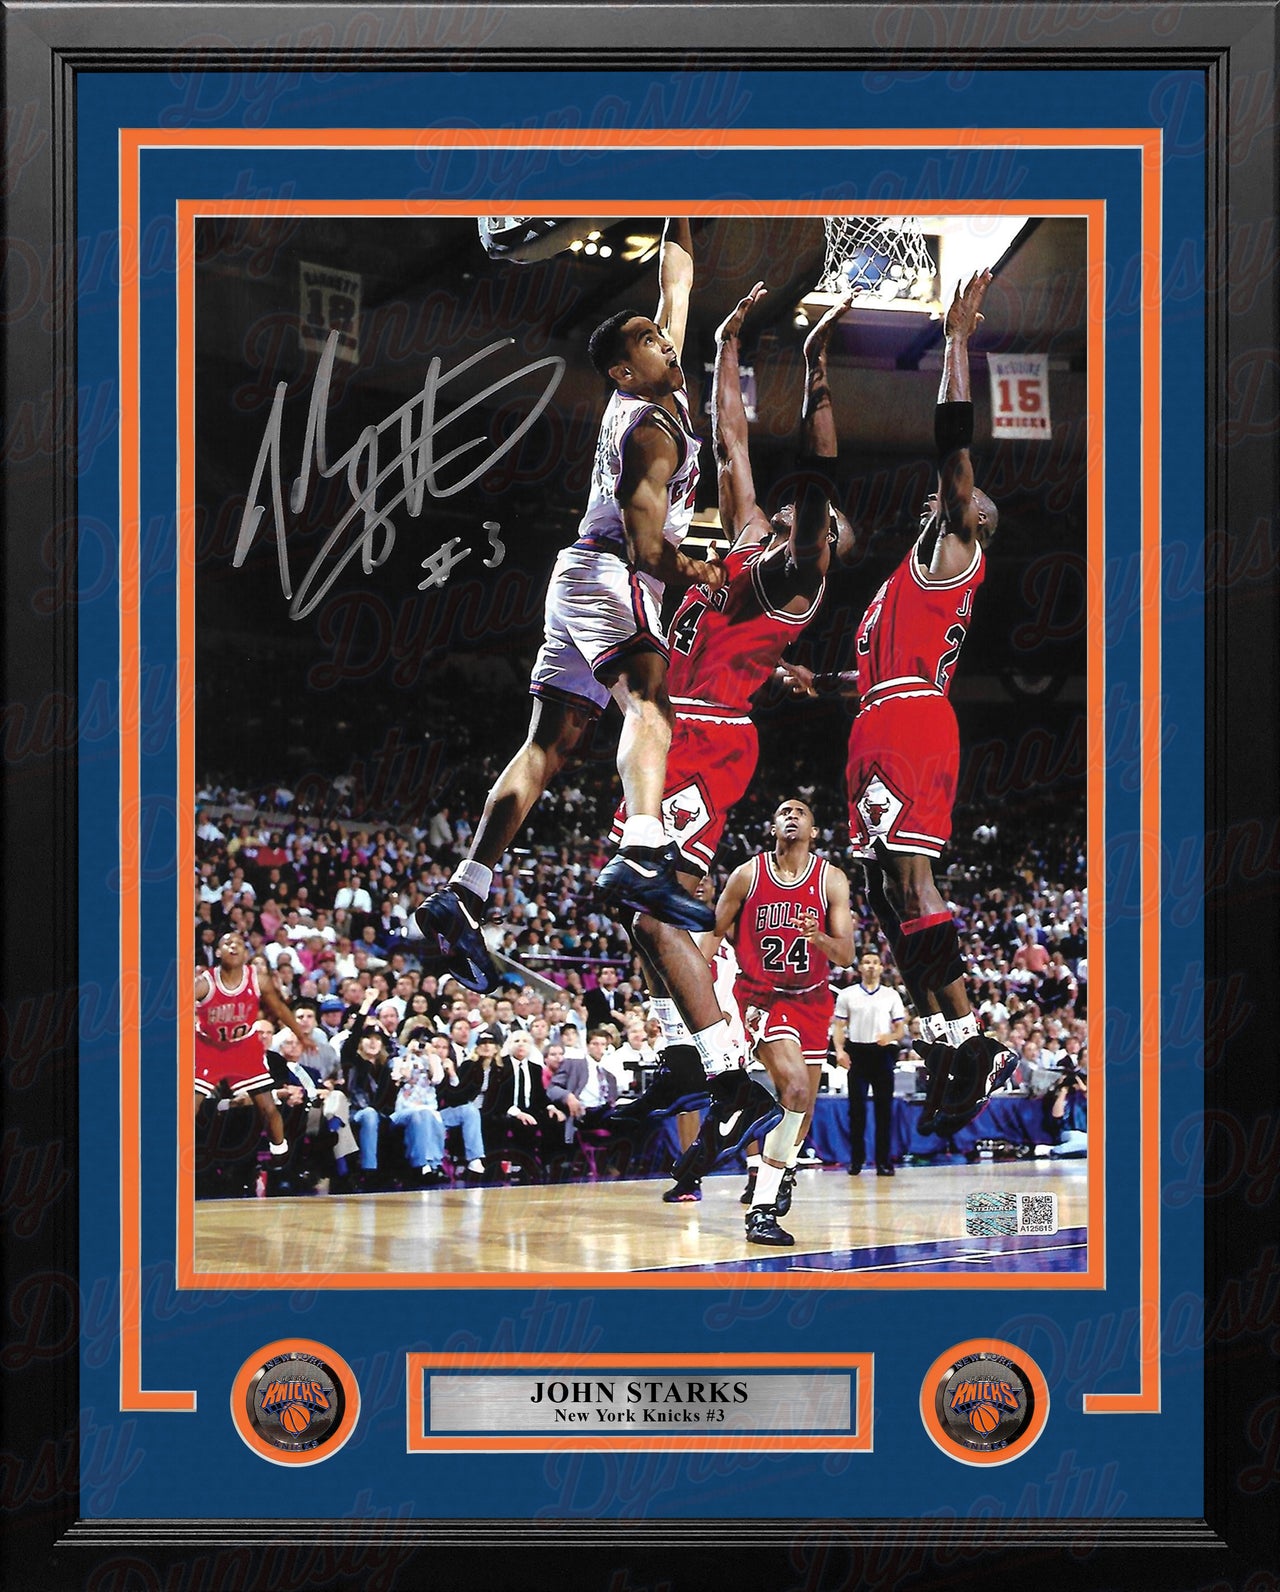 John Starks v Jordan's Bulls New York Knicks Autographed Framed Photo - Steiner Sports Authenticated - Dynasty Sports & Framing 